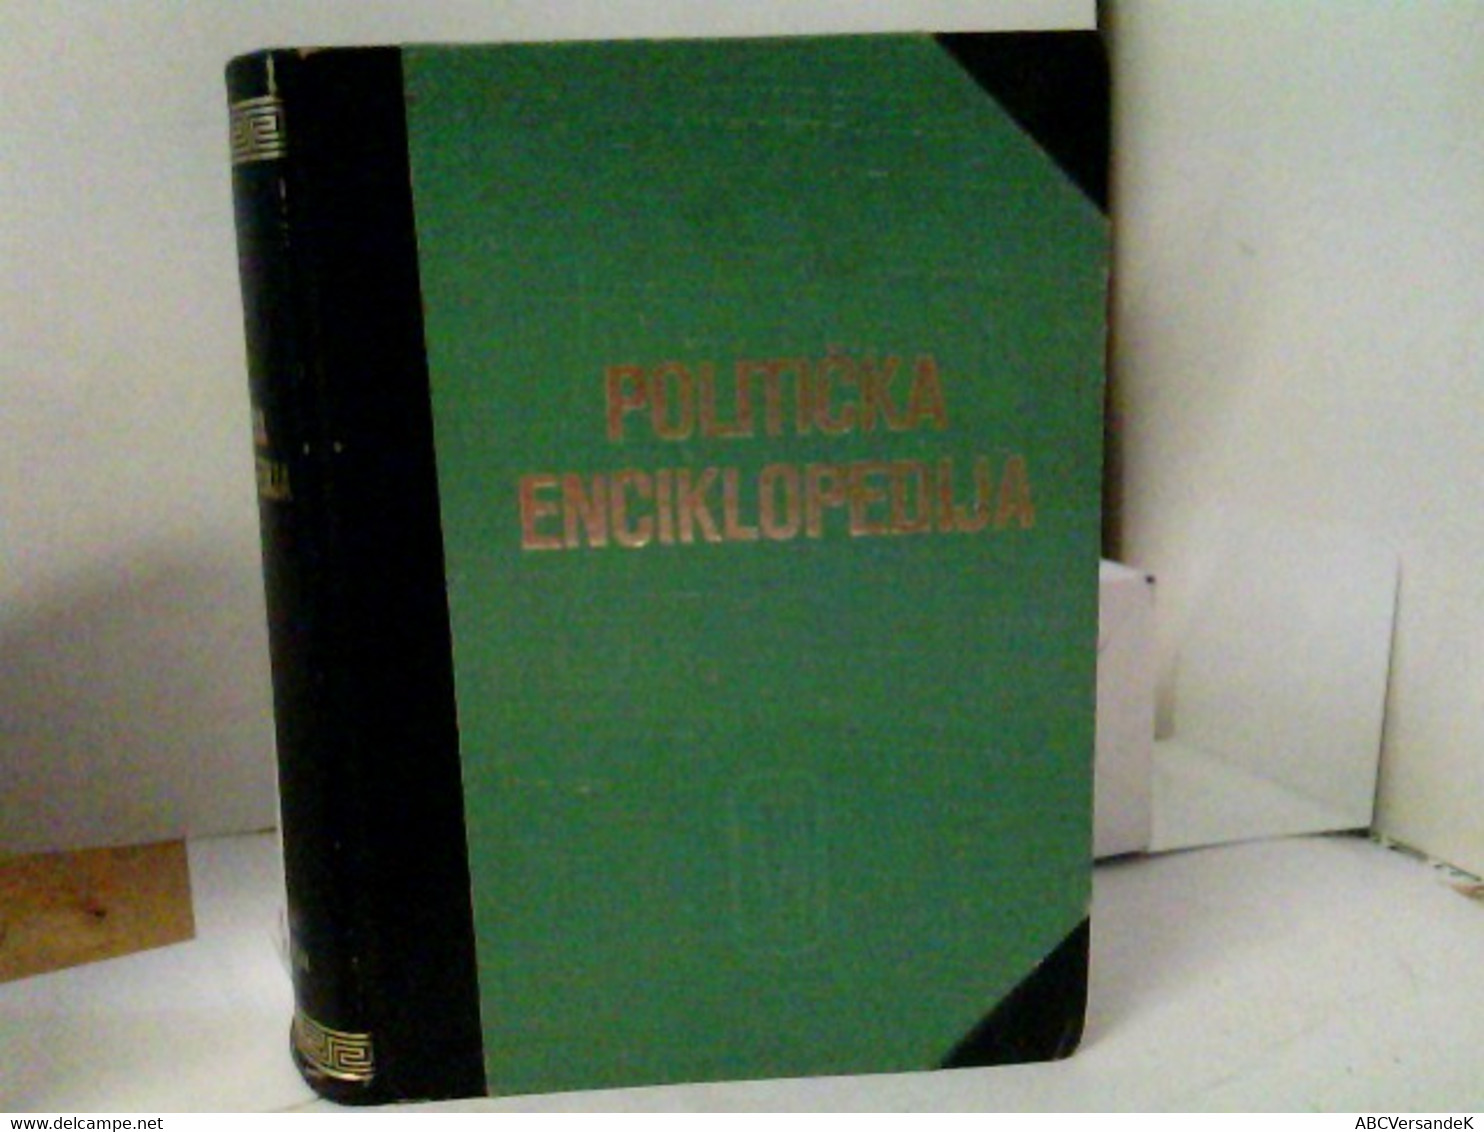 Politicka Enciklopedija - Lessico